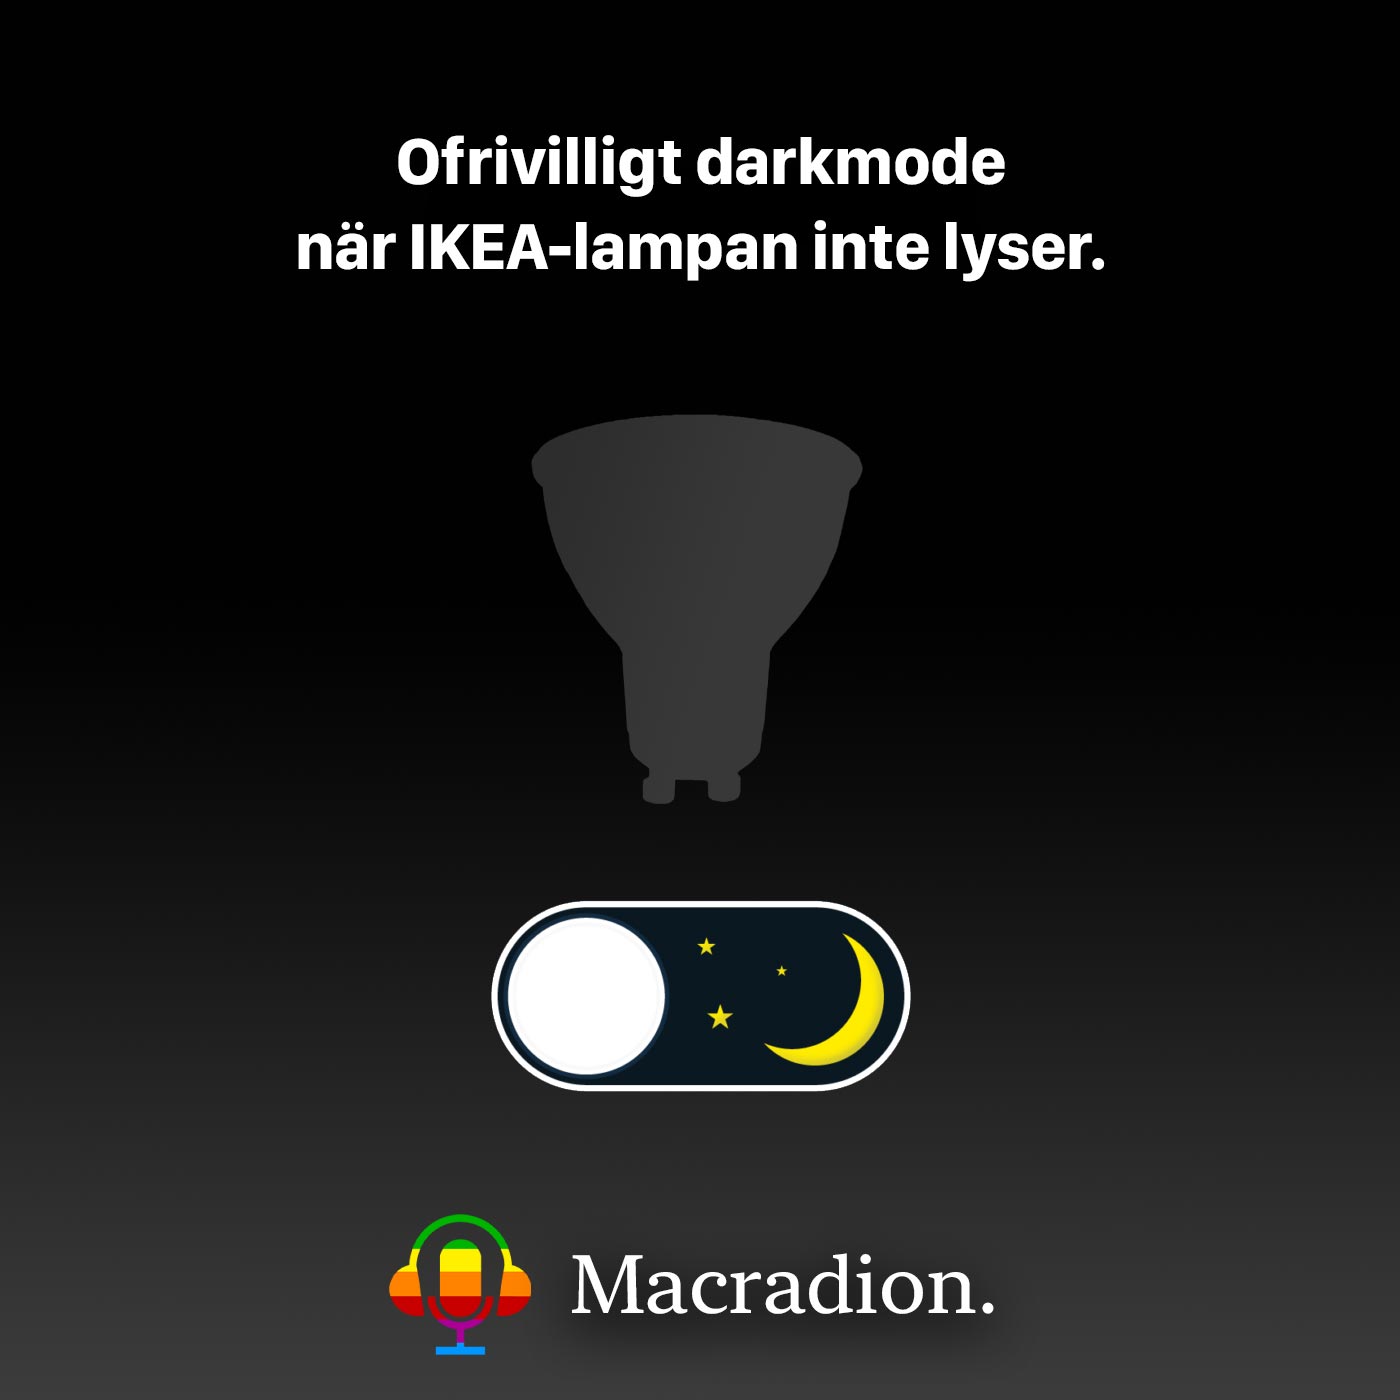 Ofrivilligt darkmode när IKEA-lampan inte lyser